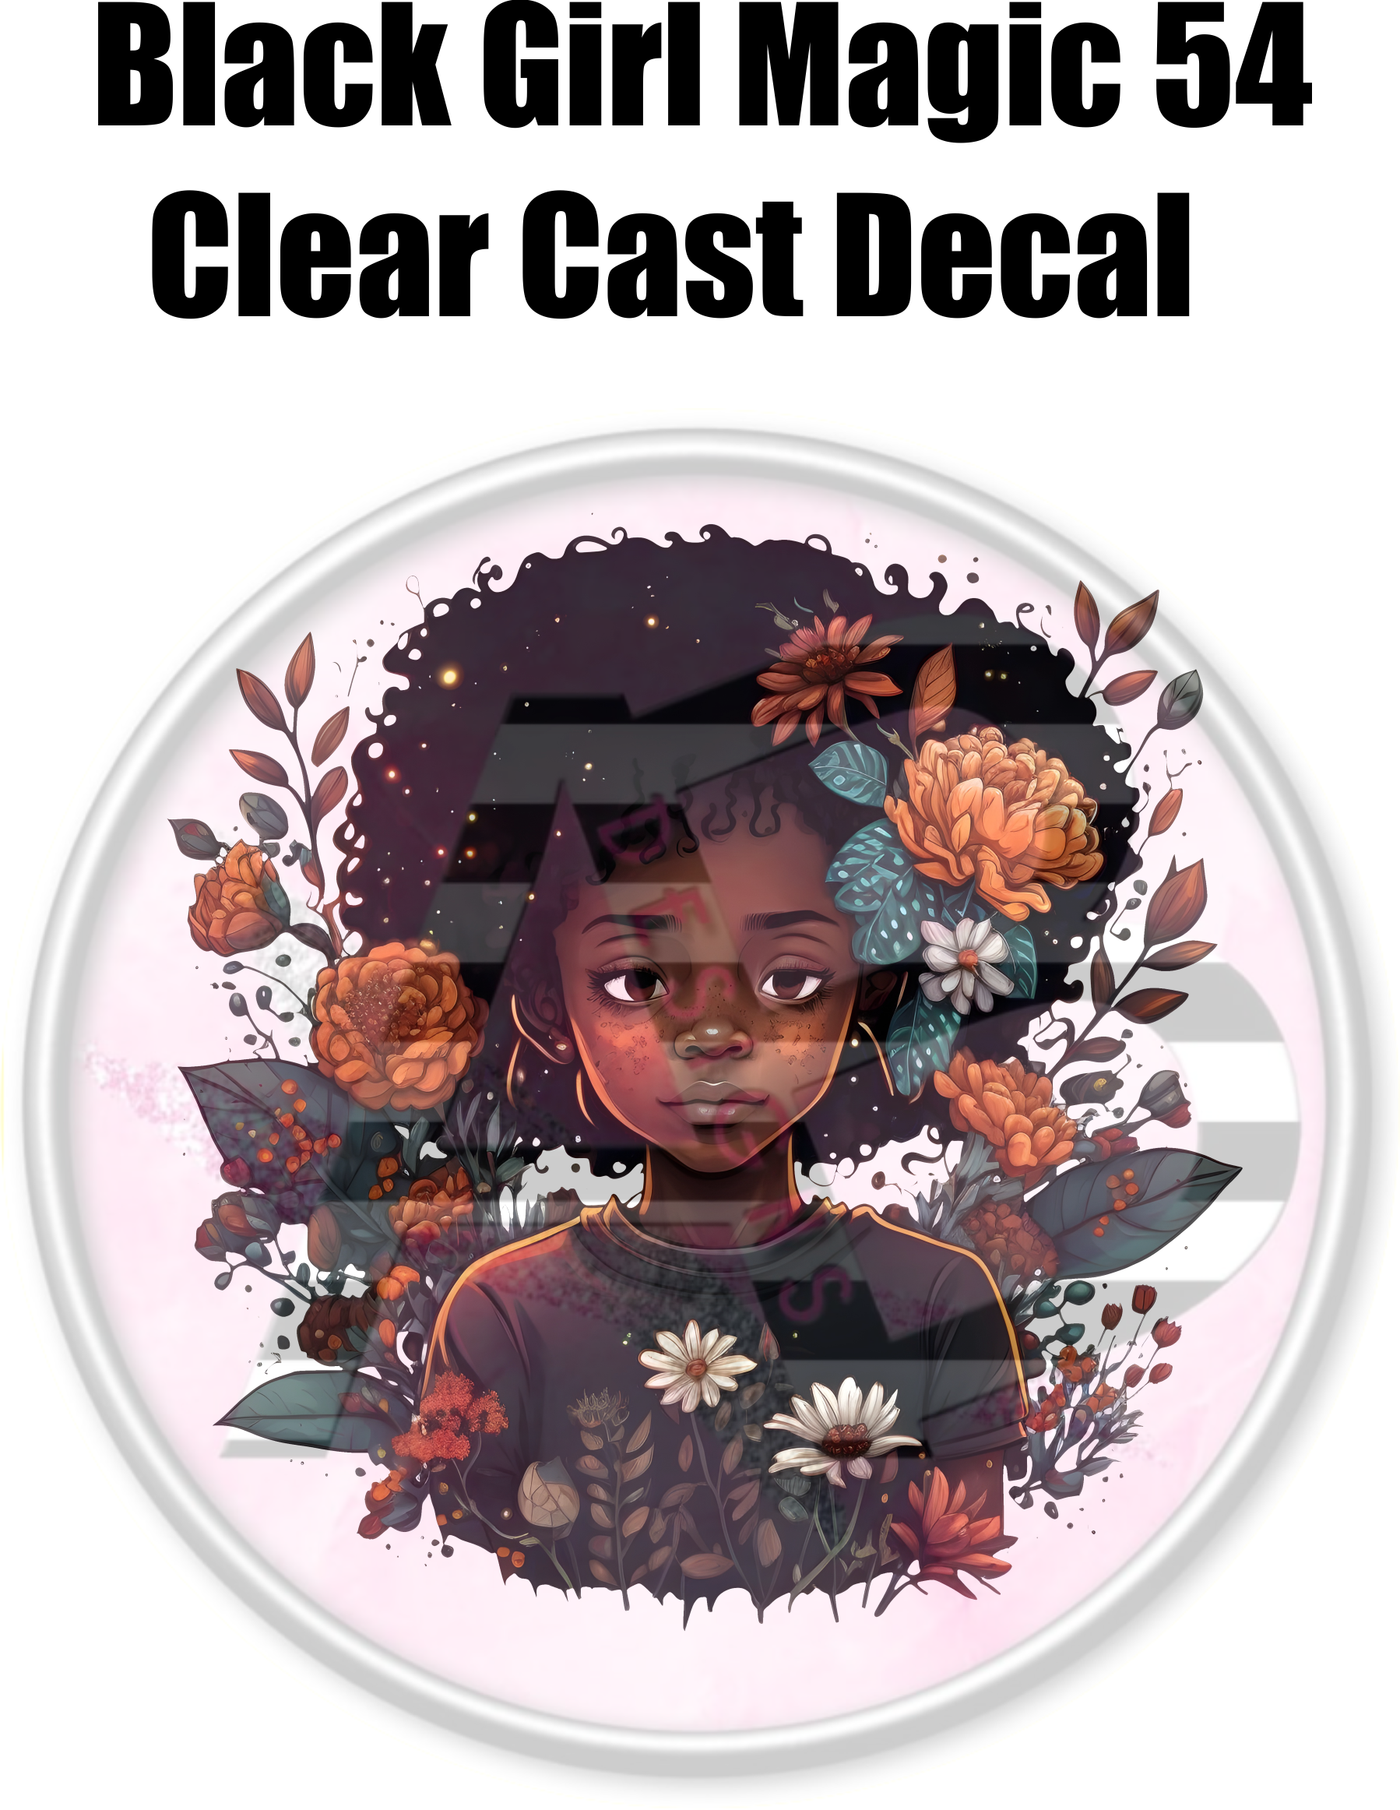 Black Girl Magic 54 - Clear Cast Decal